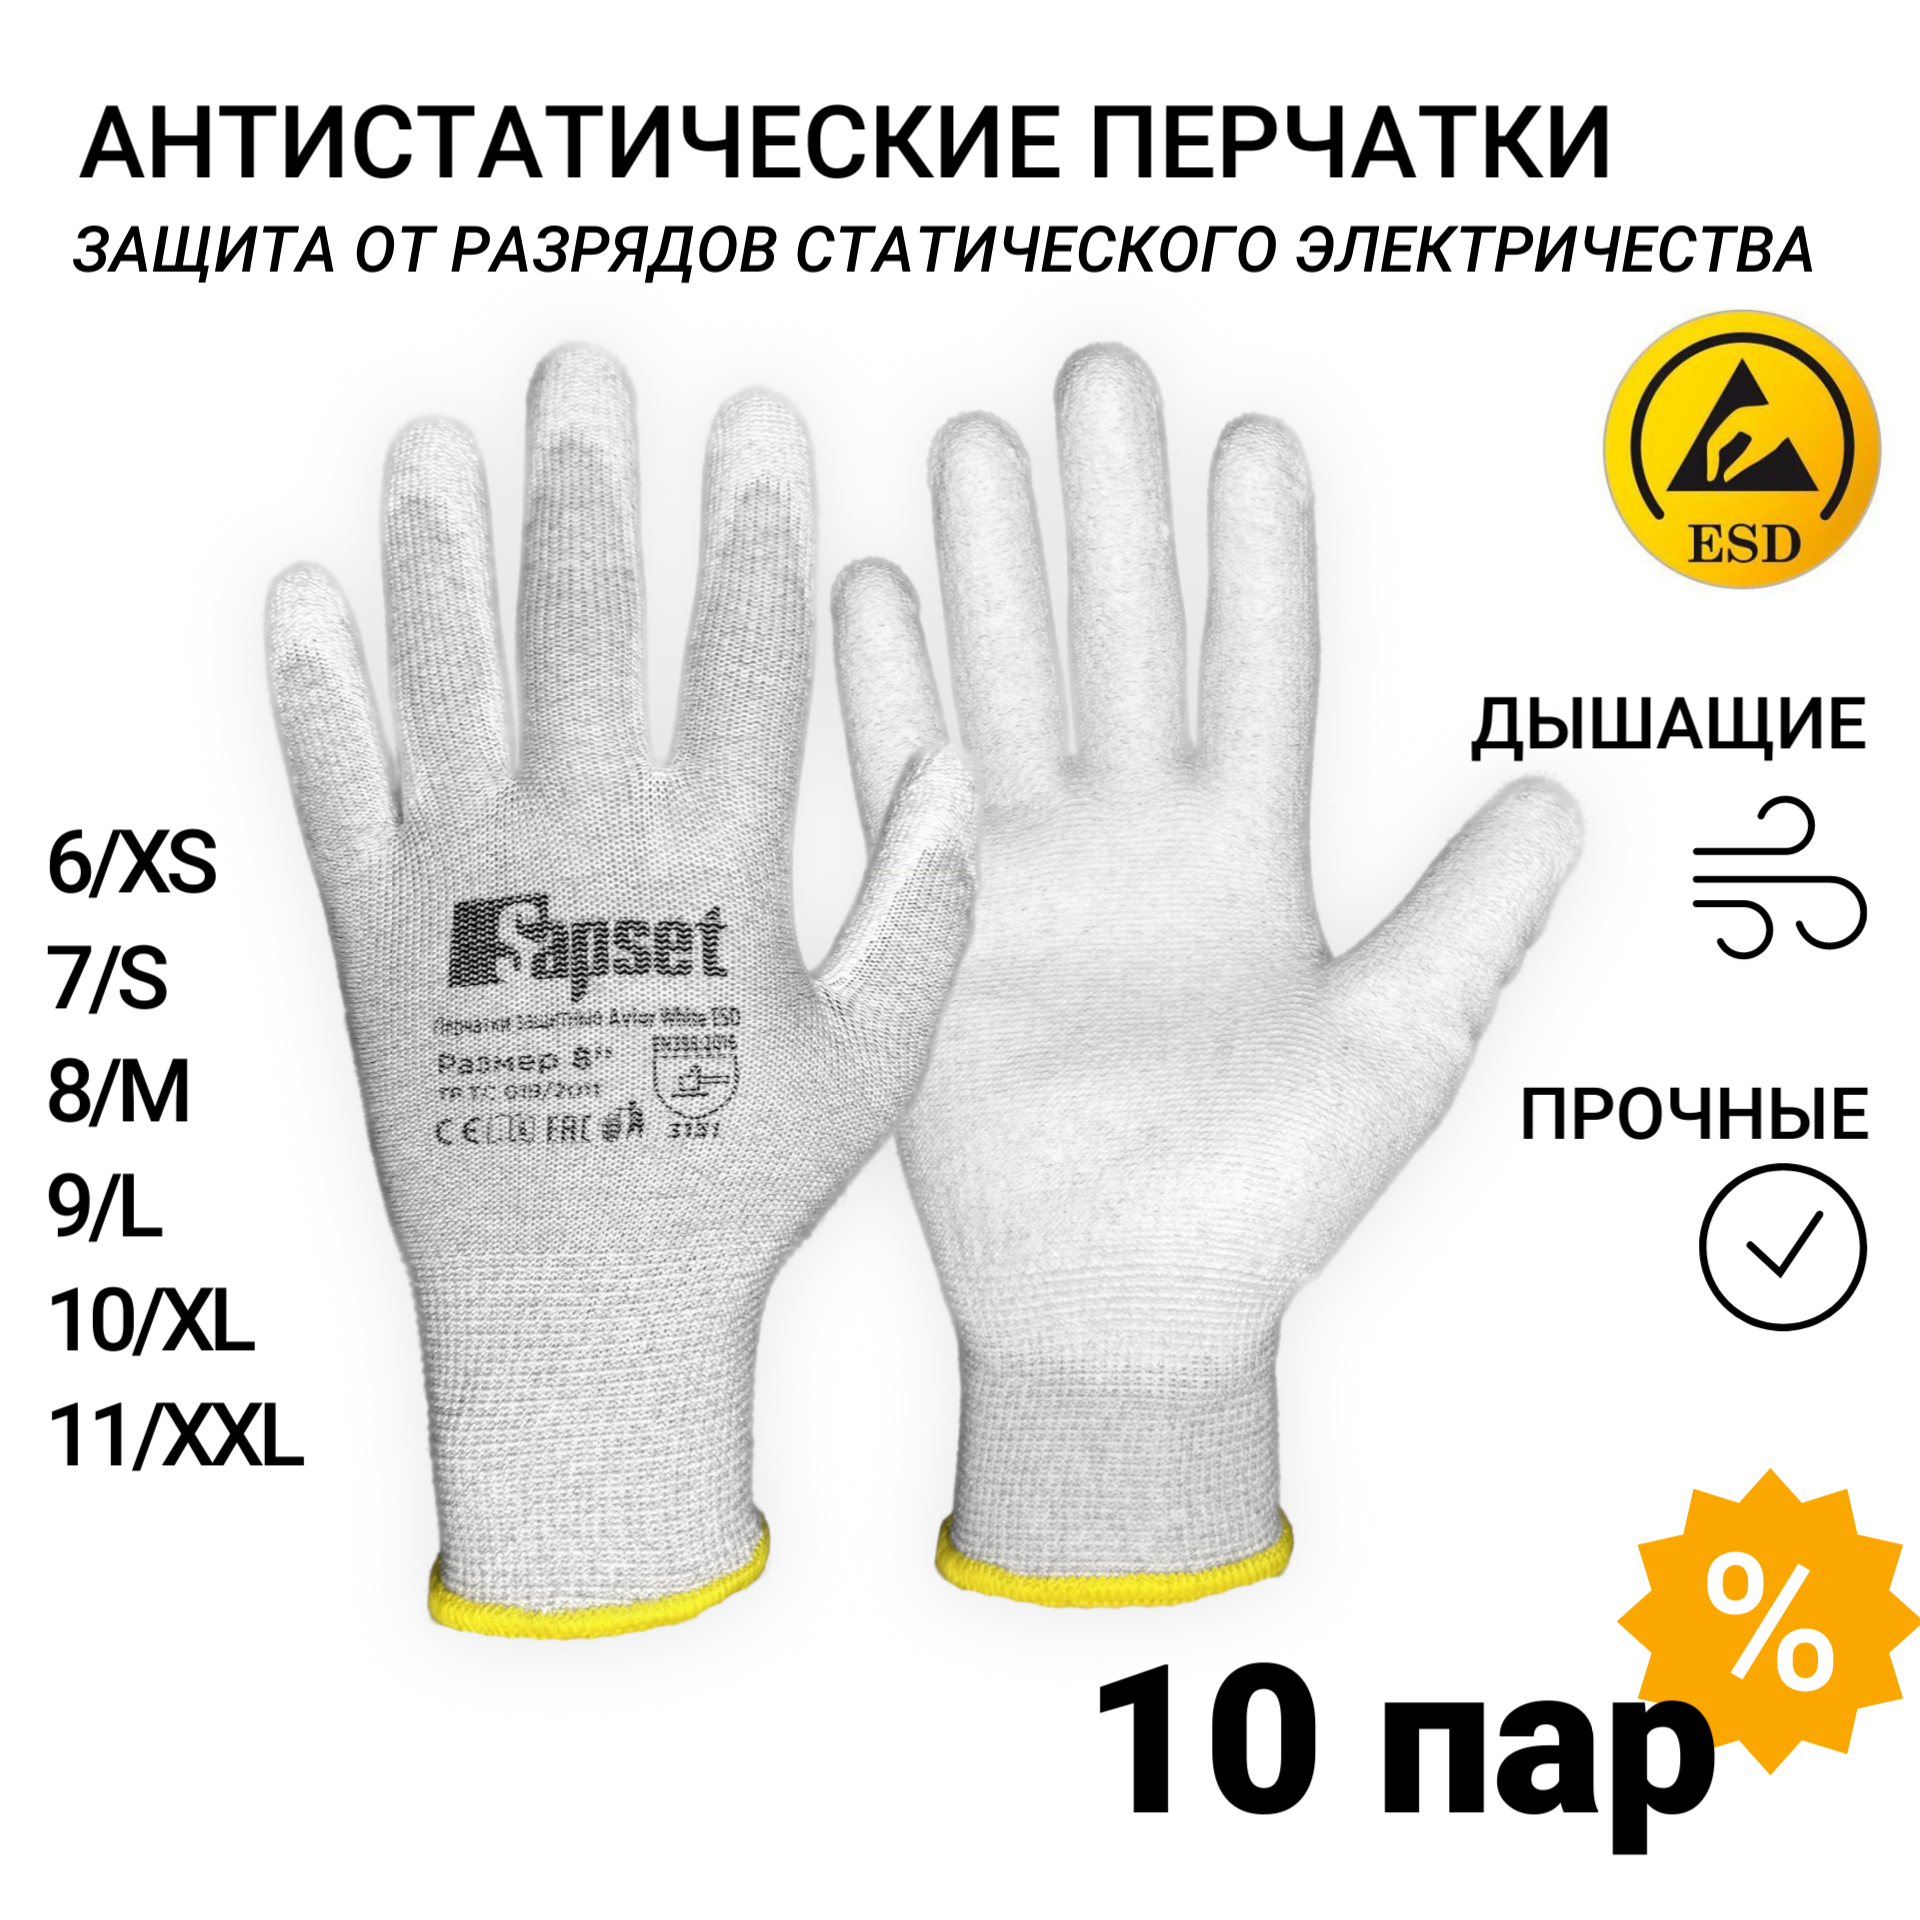 Перчатки рабочие с покрытием из полиуретана Sapset Avior White ESD антистатические размер S/7 - 10 пар